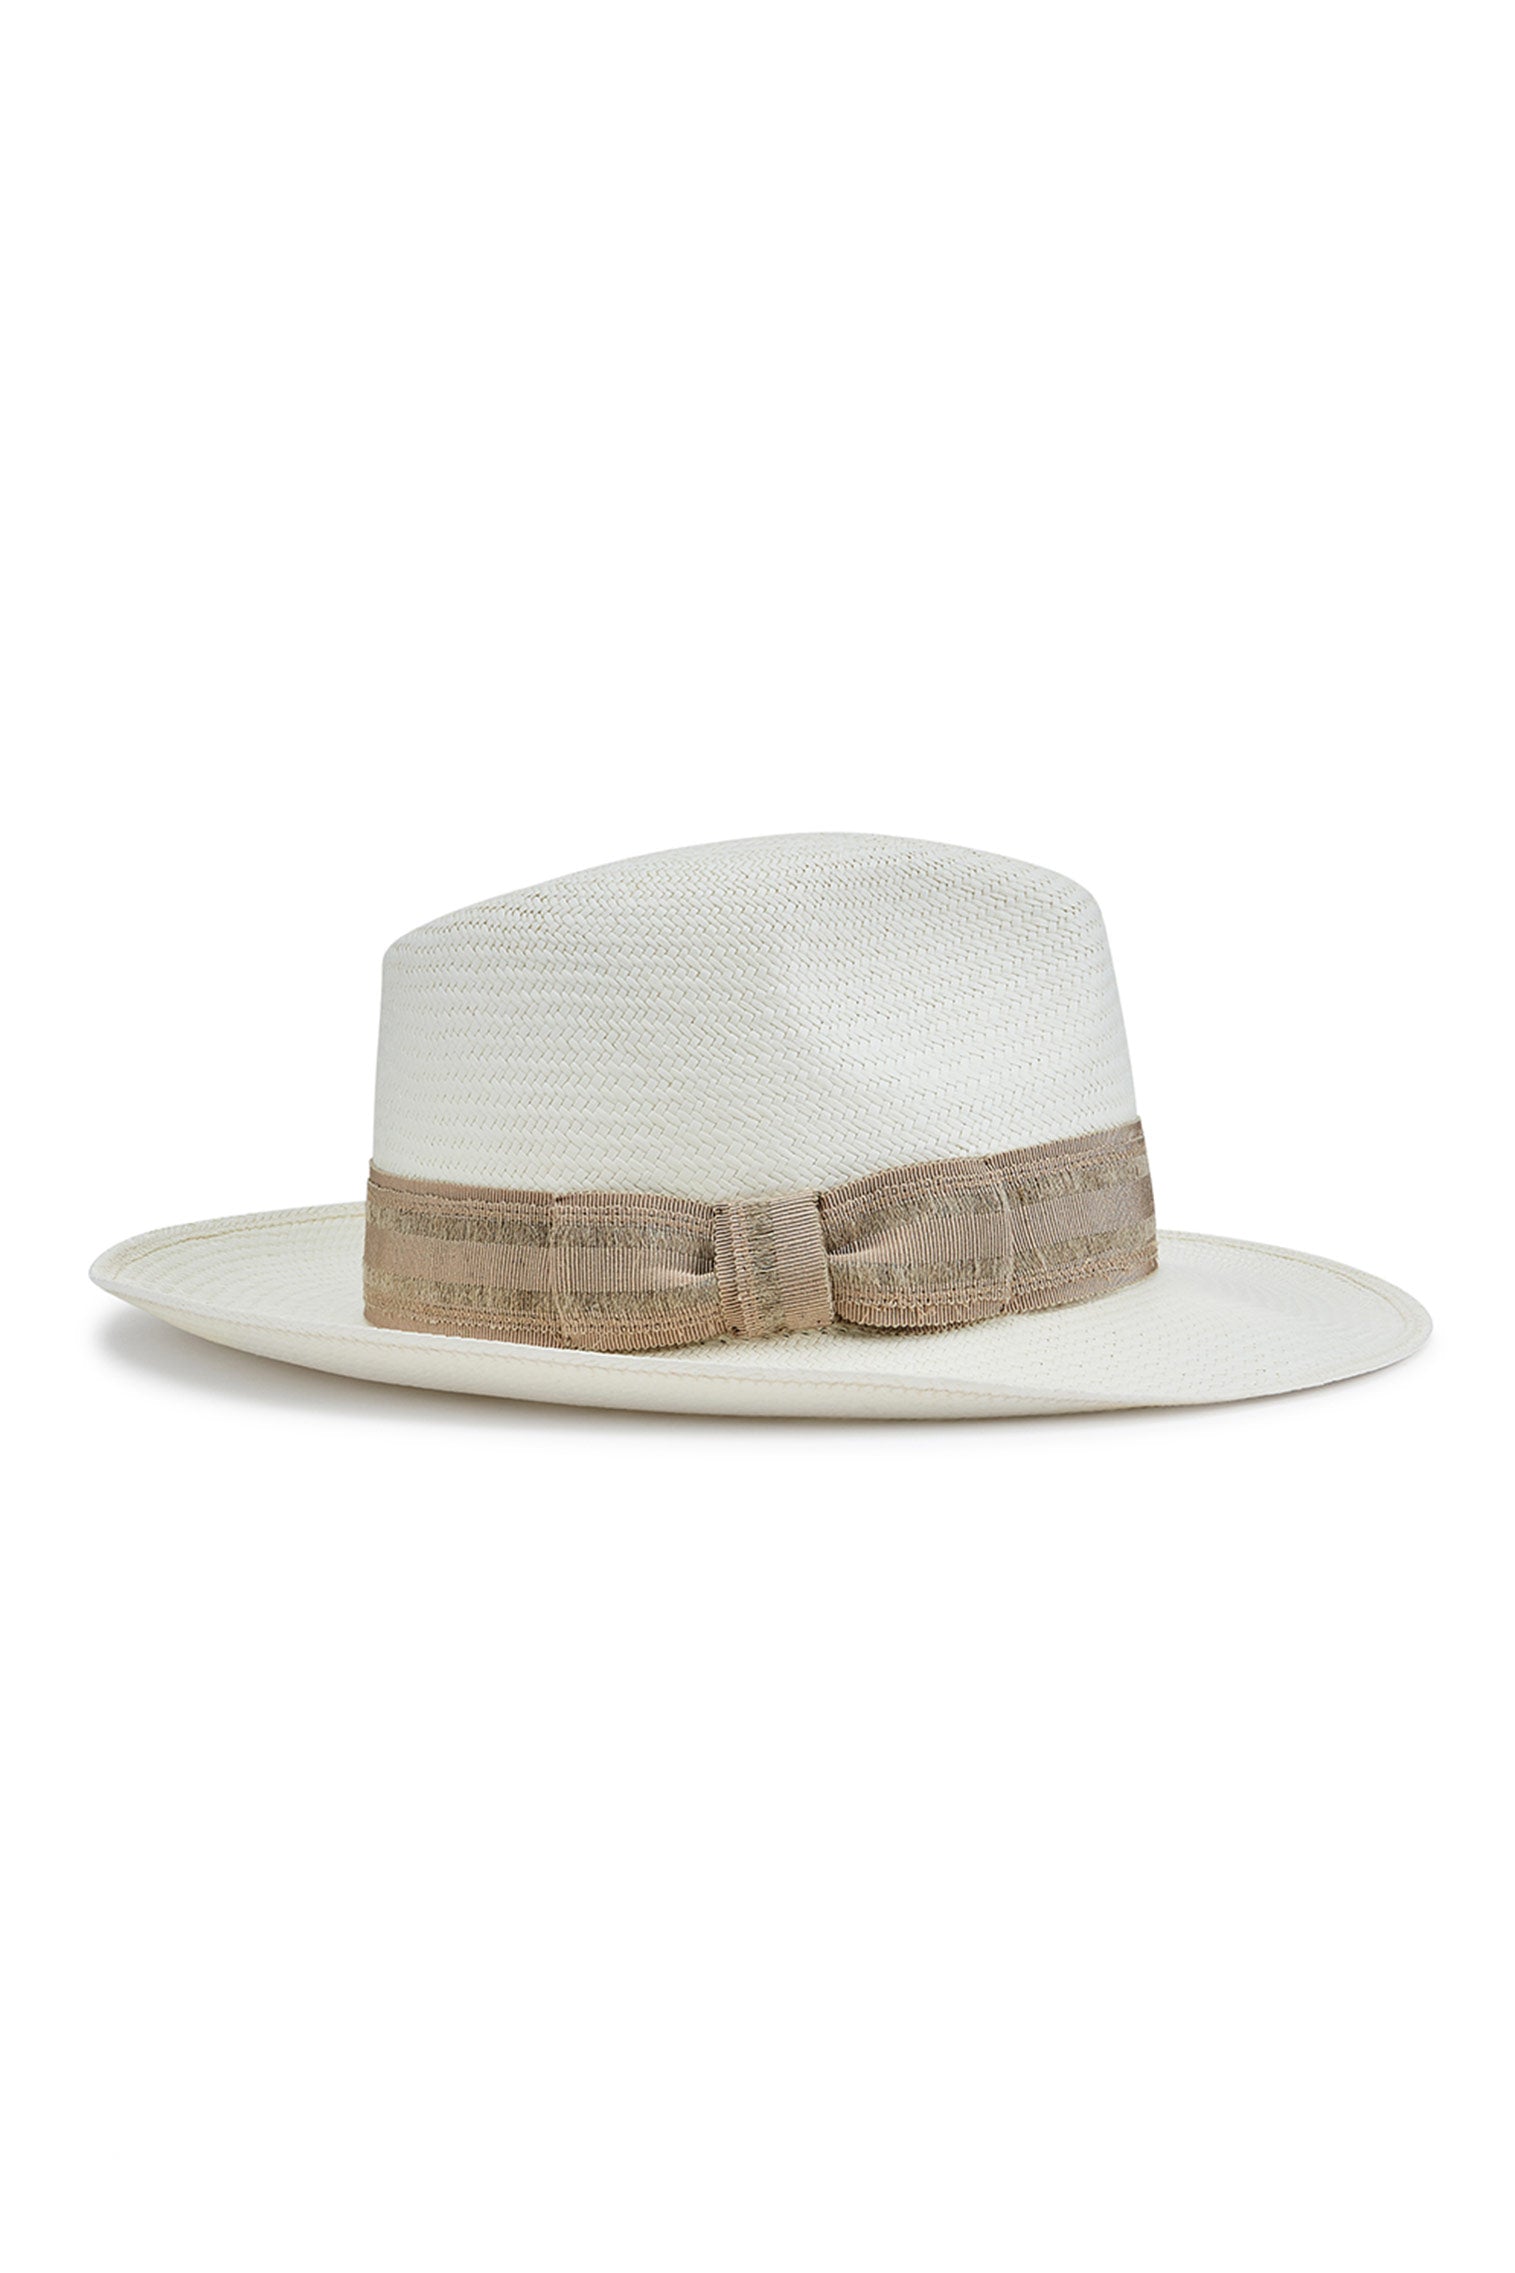 Berwick Panama Hat - Henley Royal Regatta Hats - Lock & Co. Hatters London UK